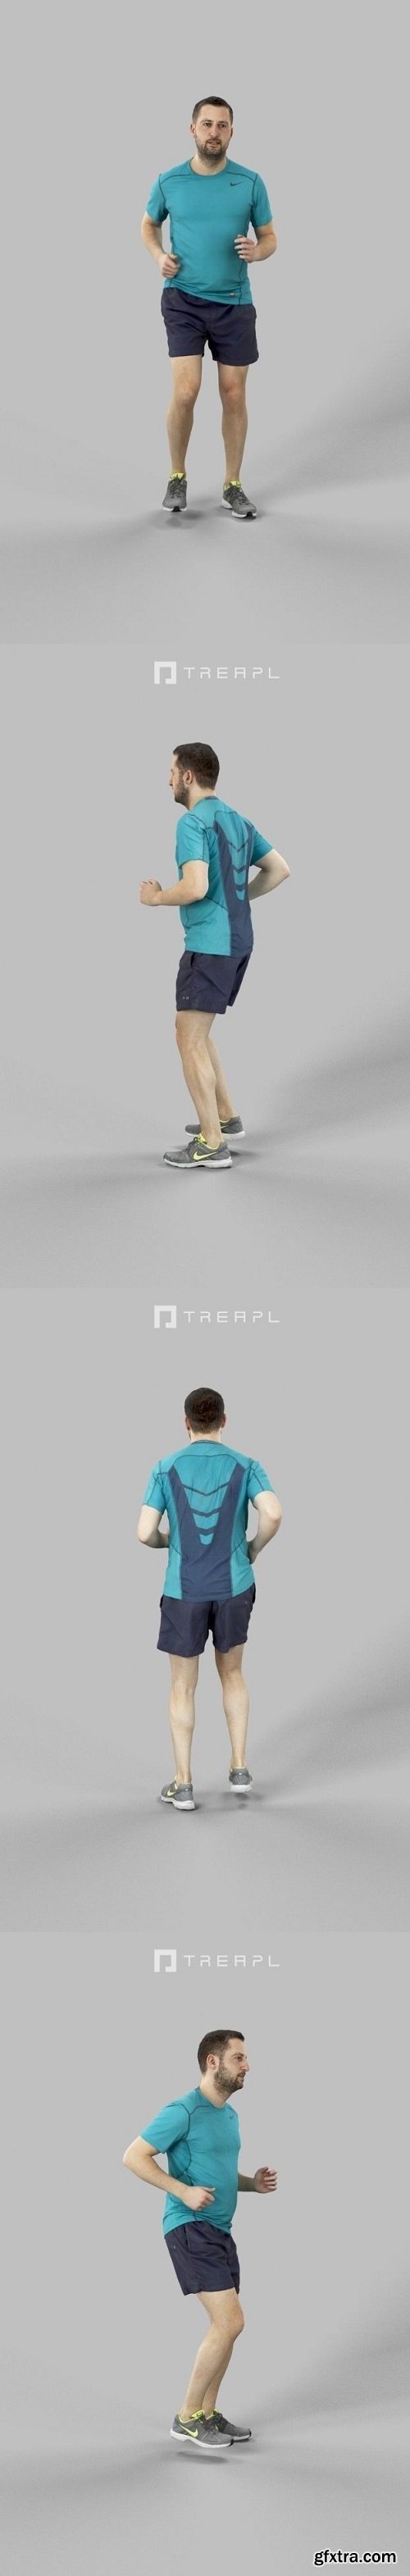 Portrait Sportswear Casual Man in Shorts Running Jogging VR / AR / low-poly 3d model